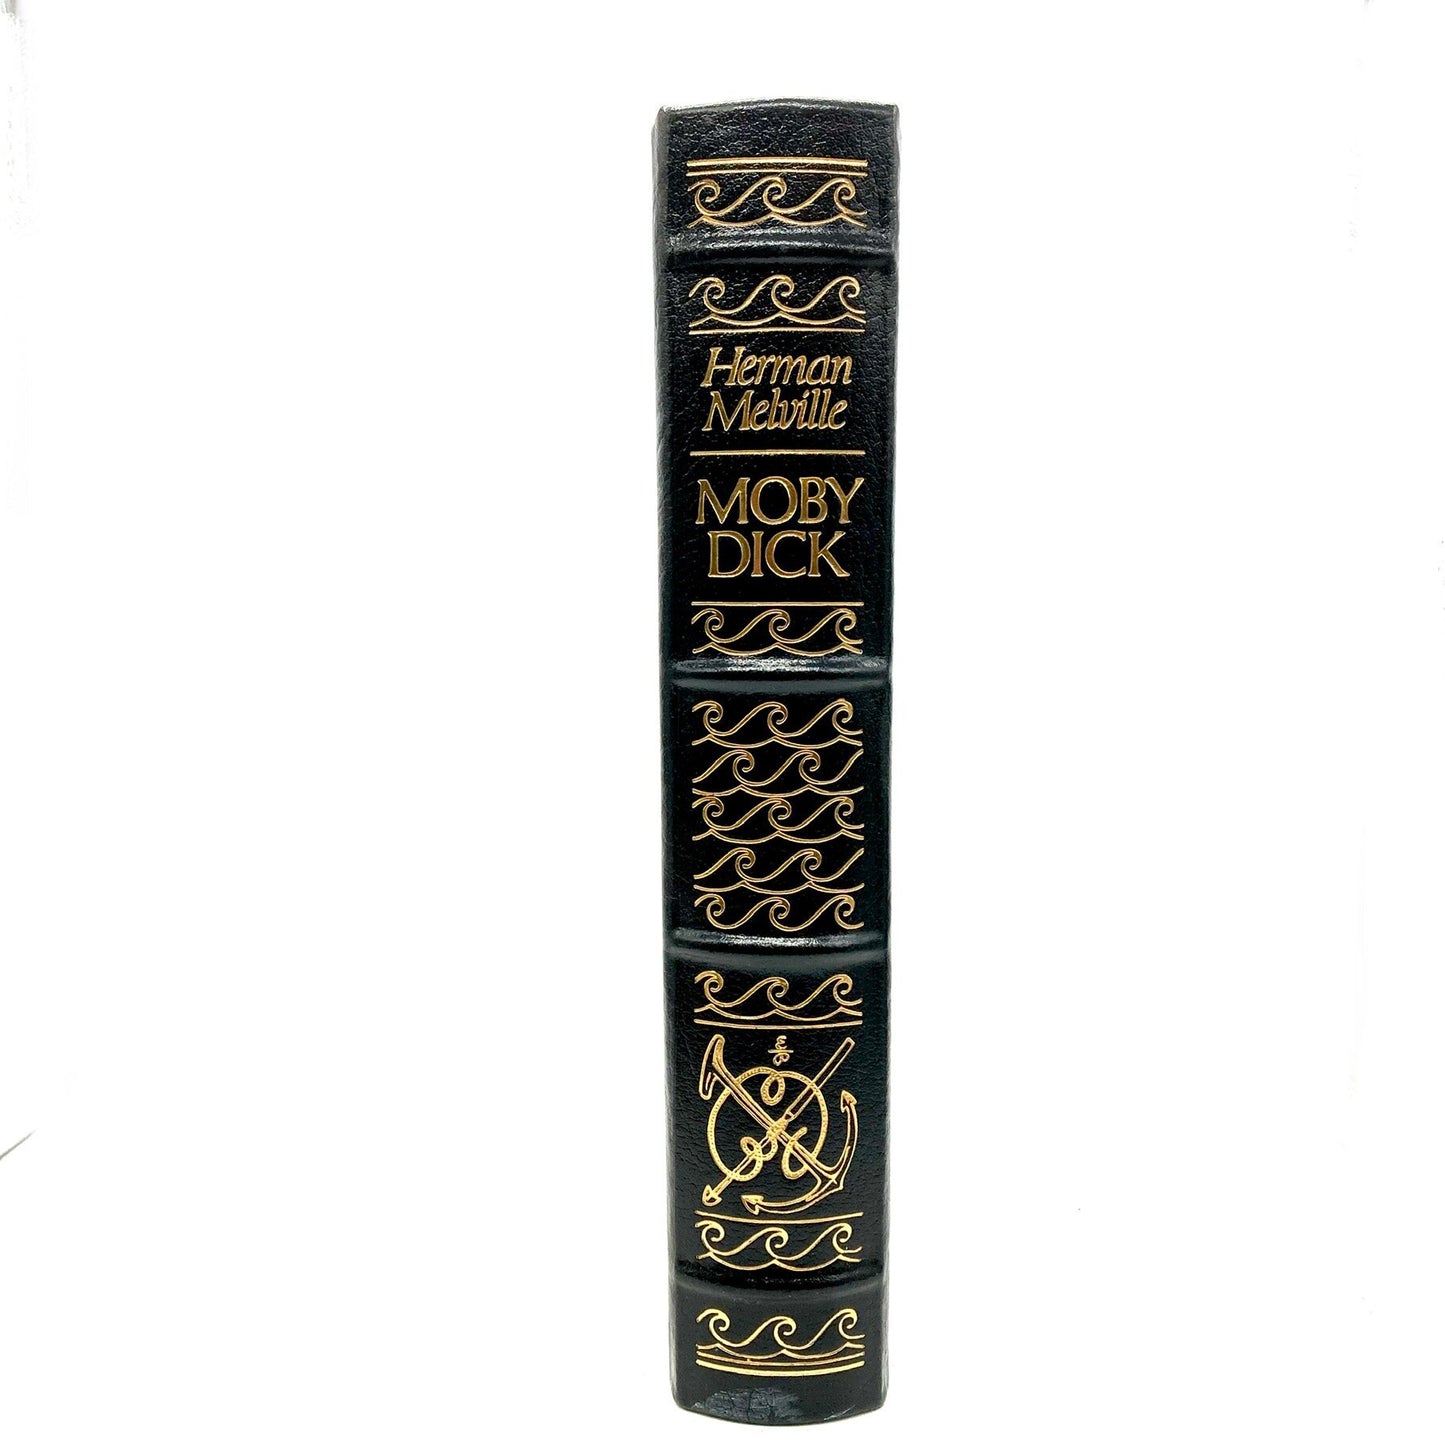 MELVILLE, Herman "Moby Dick" [Easton Press, 1977] - Buzz Bookstore